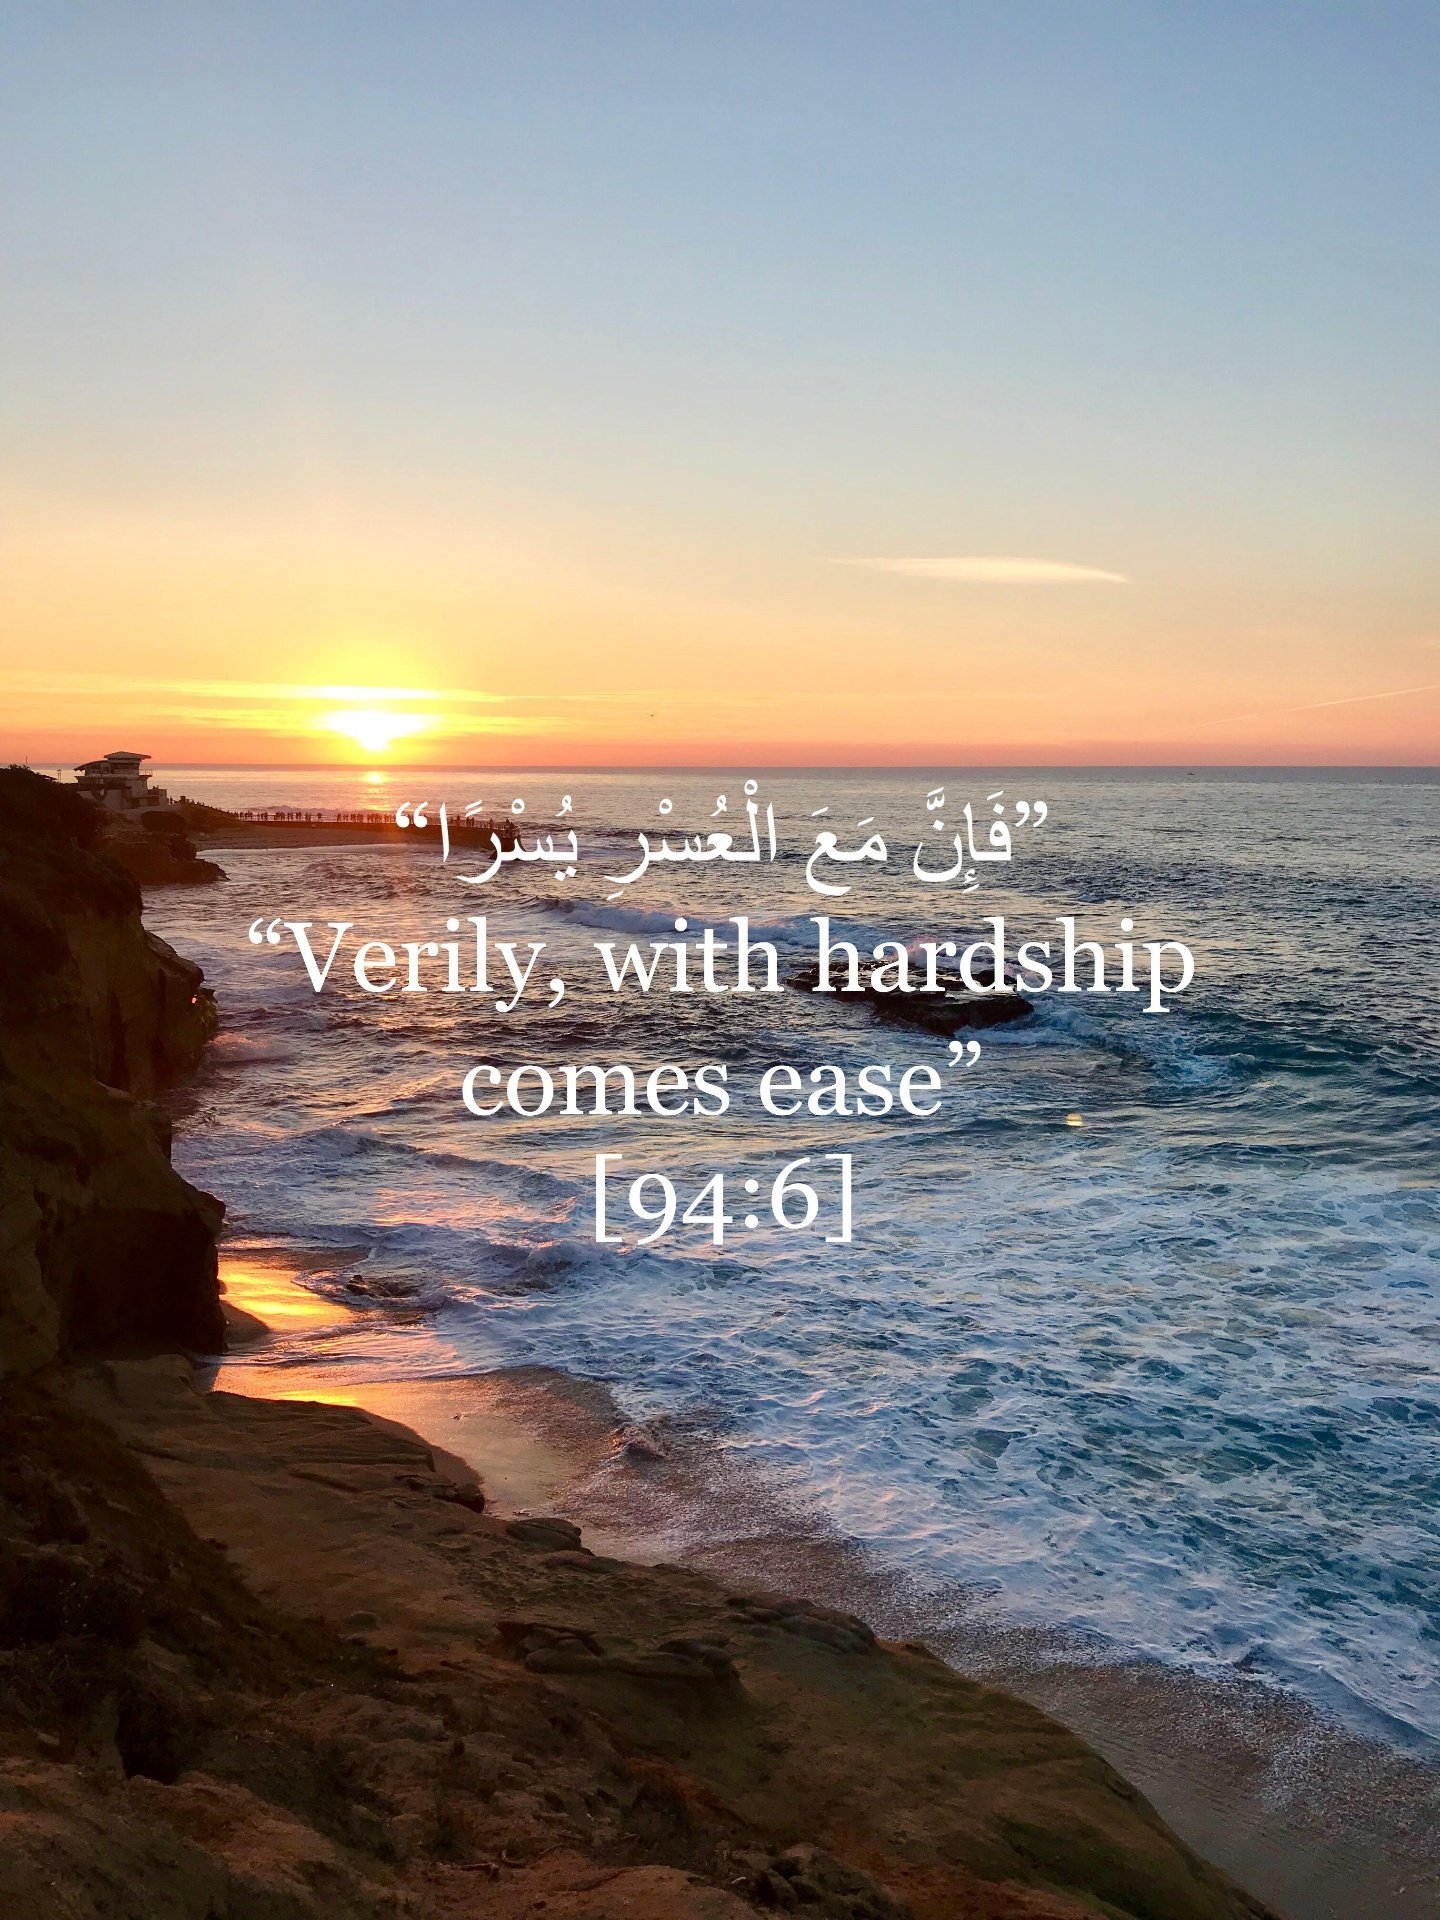 After Hardship Comes Ease